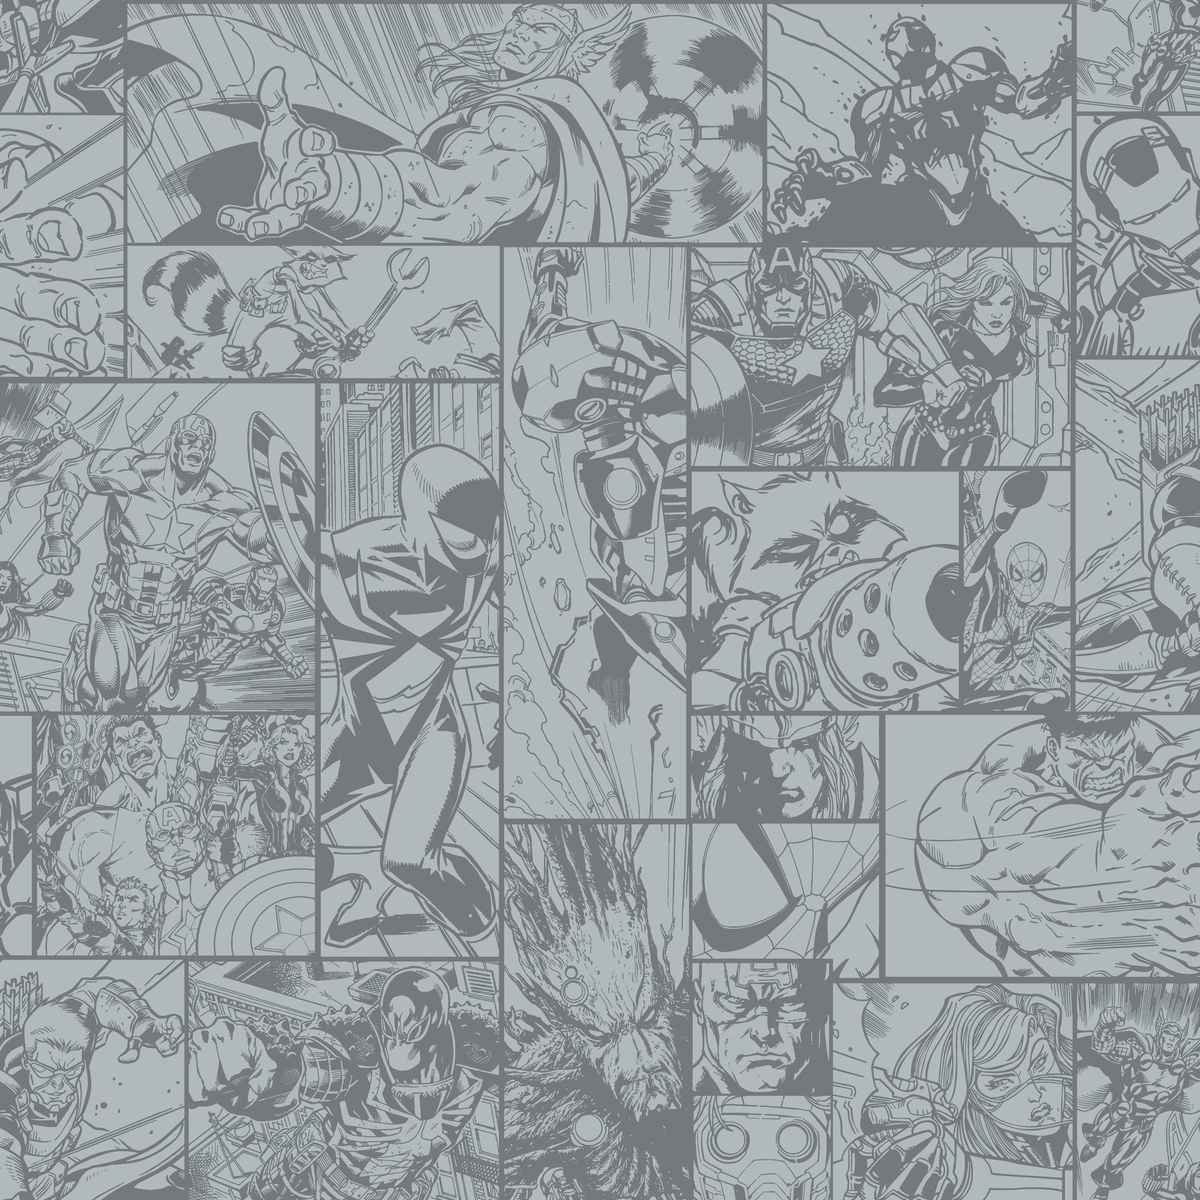 Marvel Comic Book Wallpapers